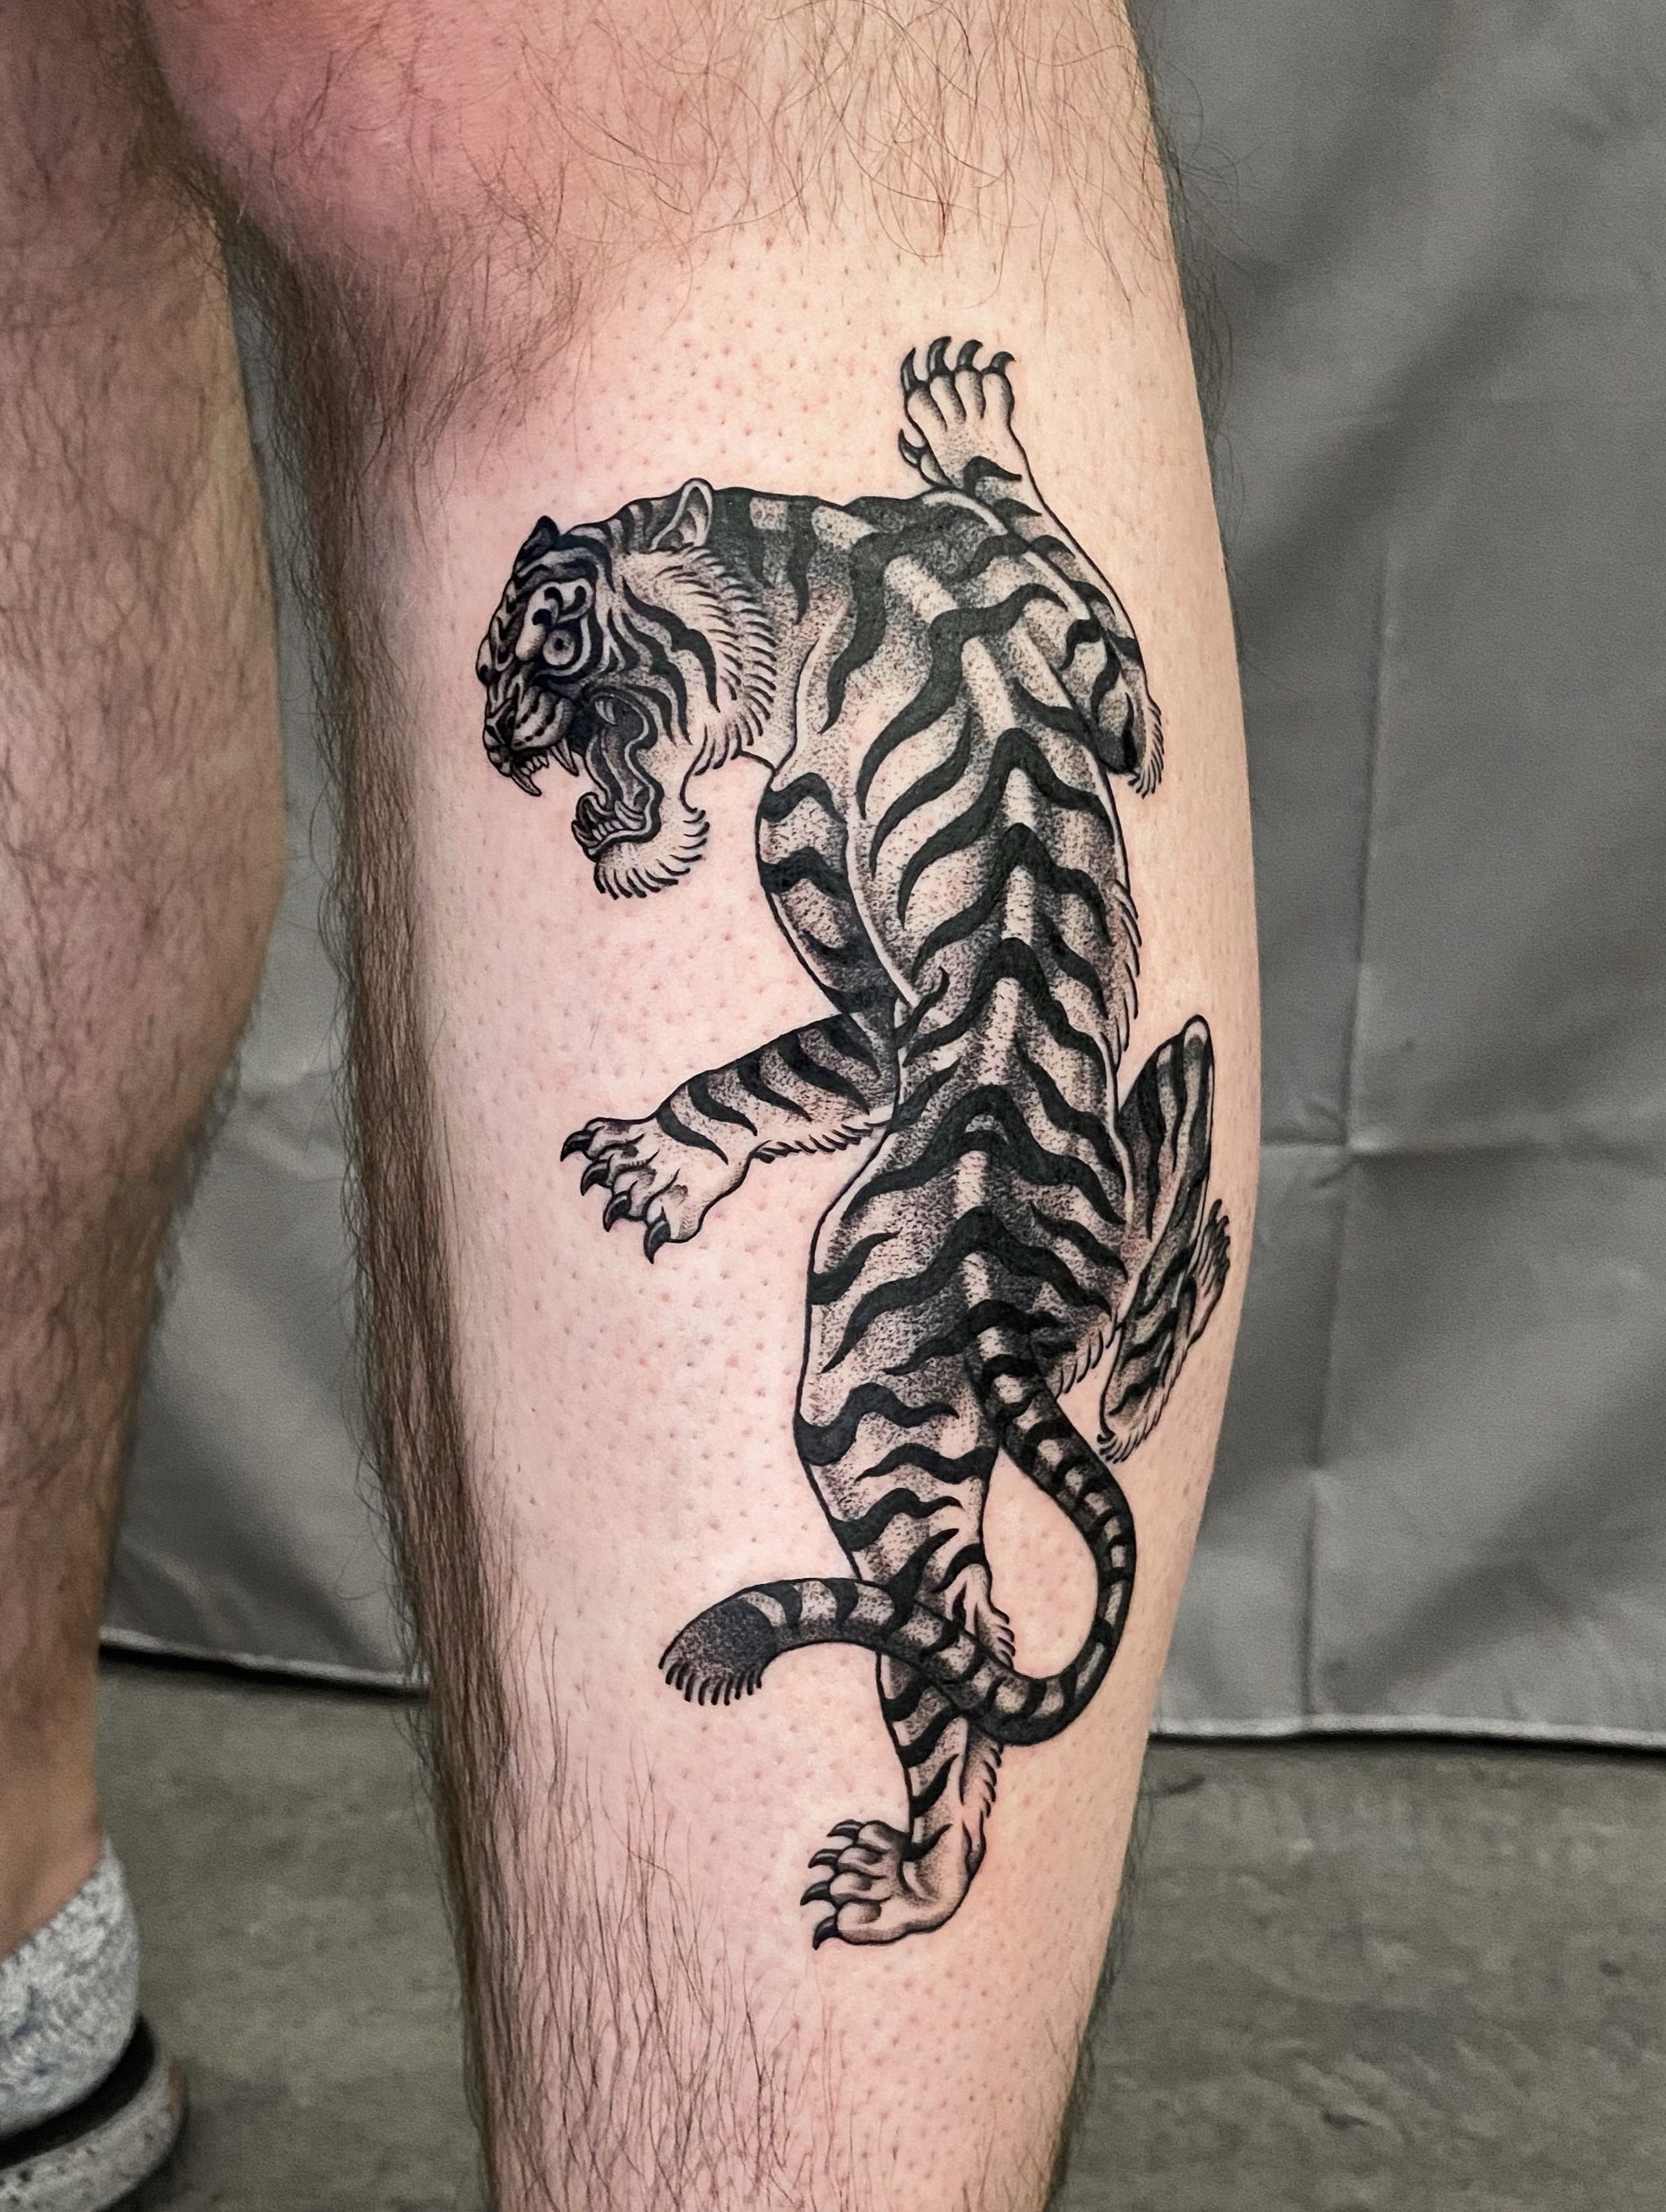 Sick dragon and tiger leg sleeve... - HON Tattoo Studio | Facebook